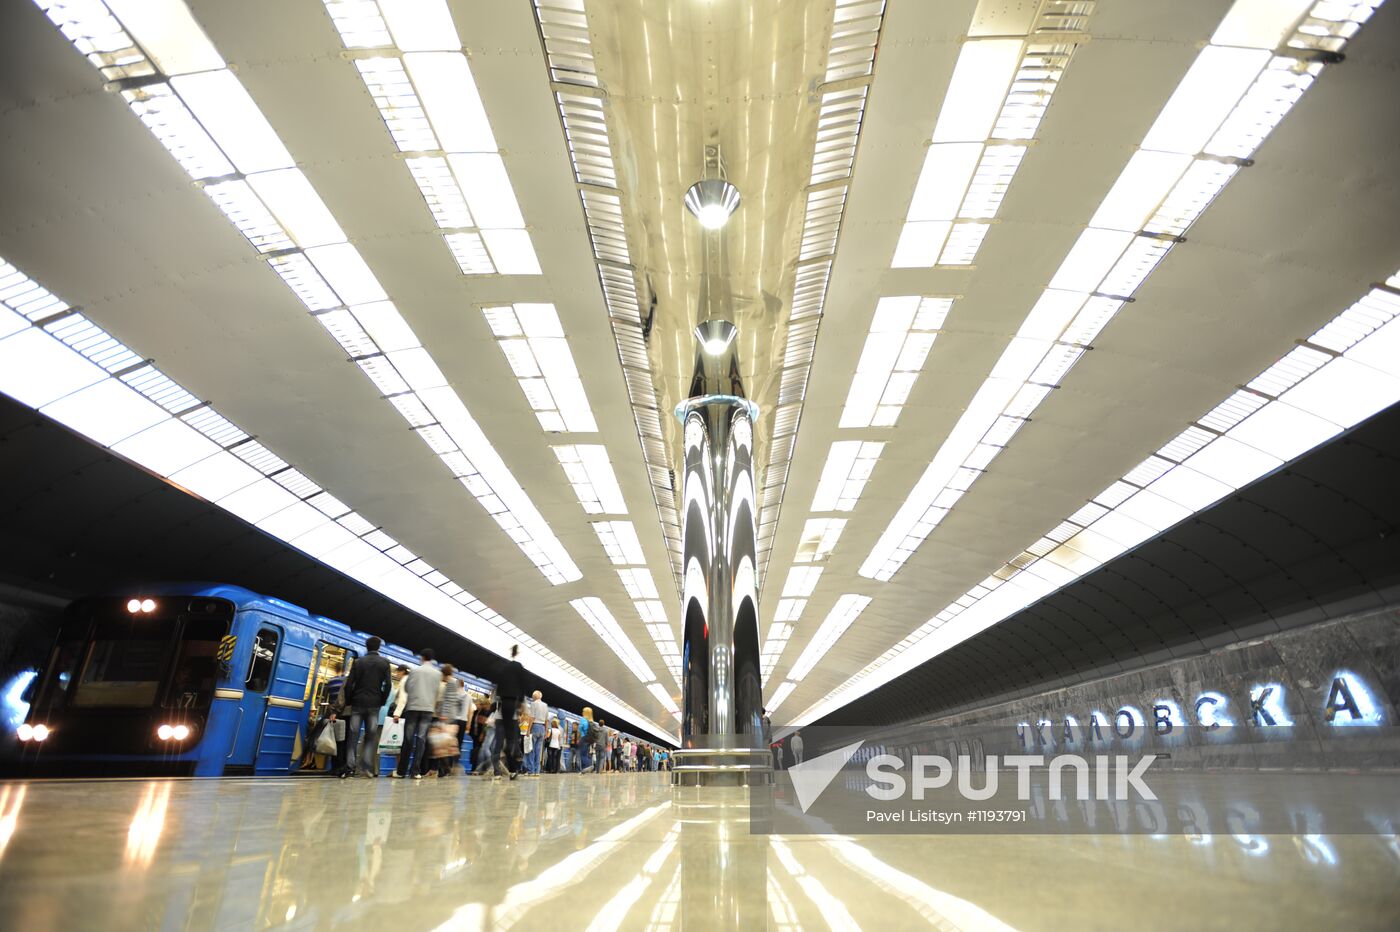 New metro station "Chkalovskaya" opens in Yekaterinburg